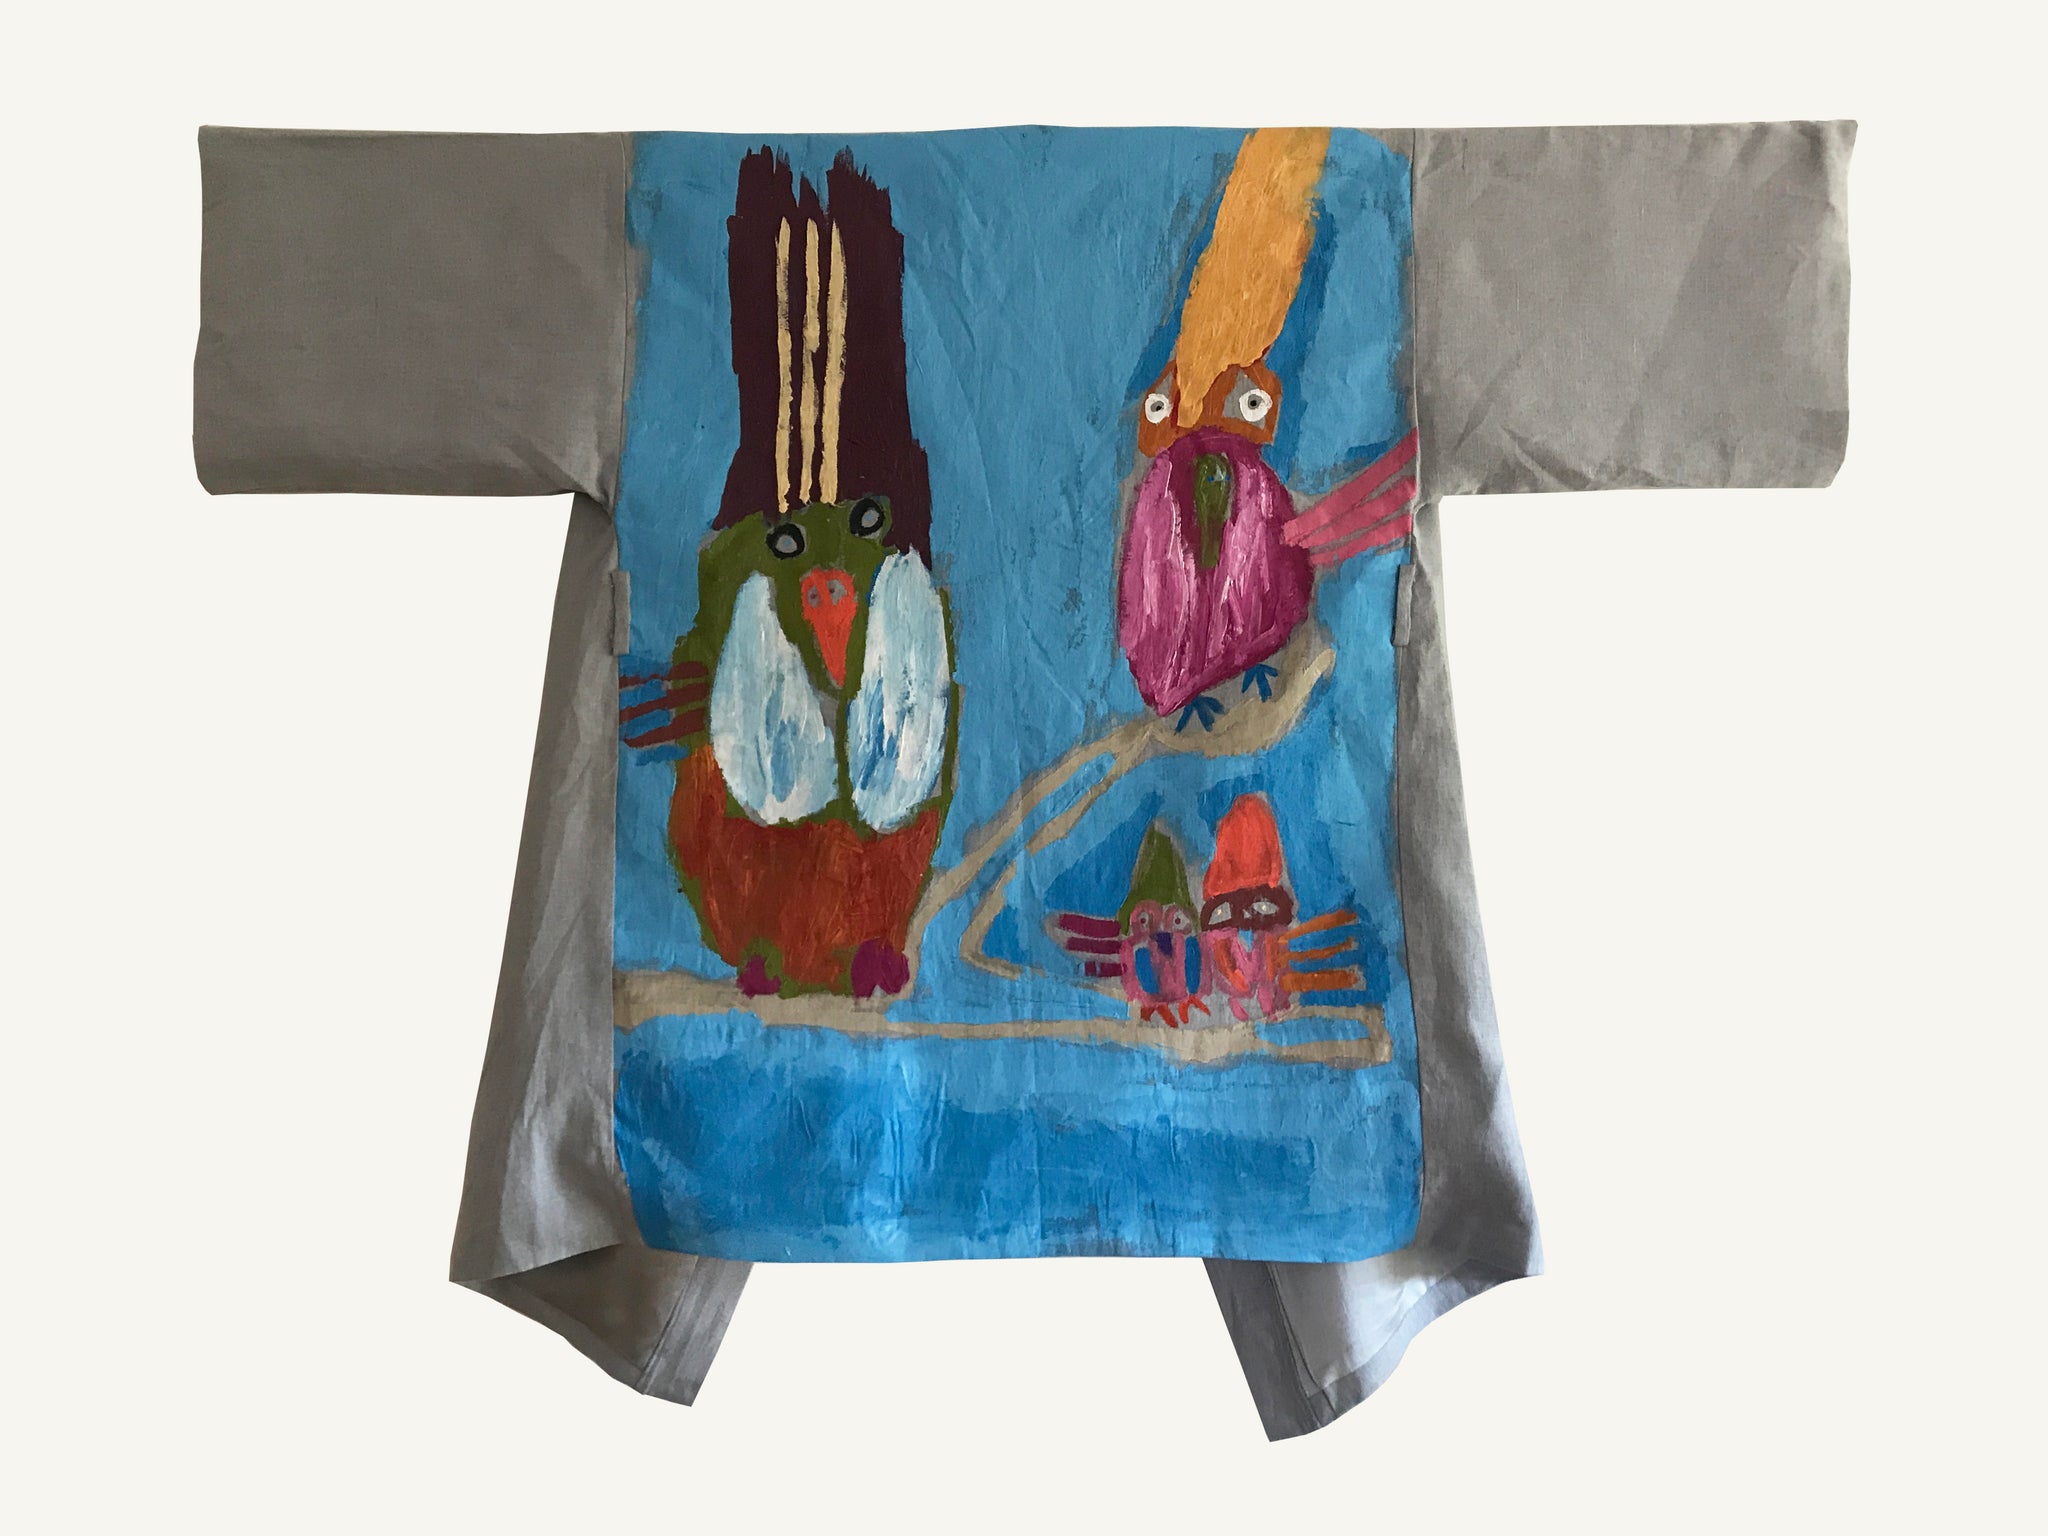 Budgerigar Dreaming Hand Painted Robe